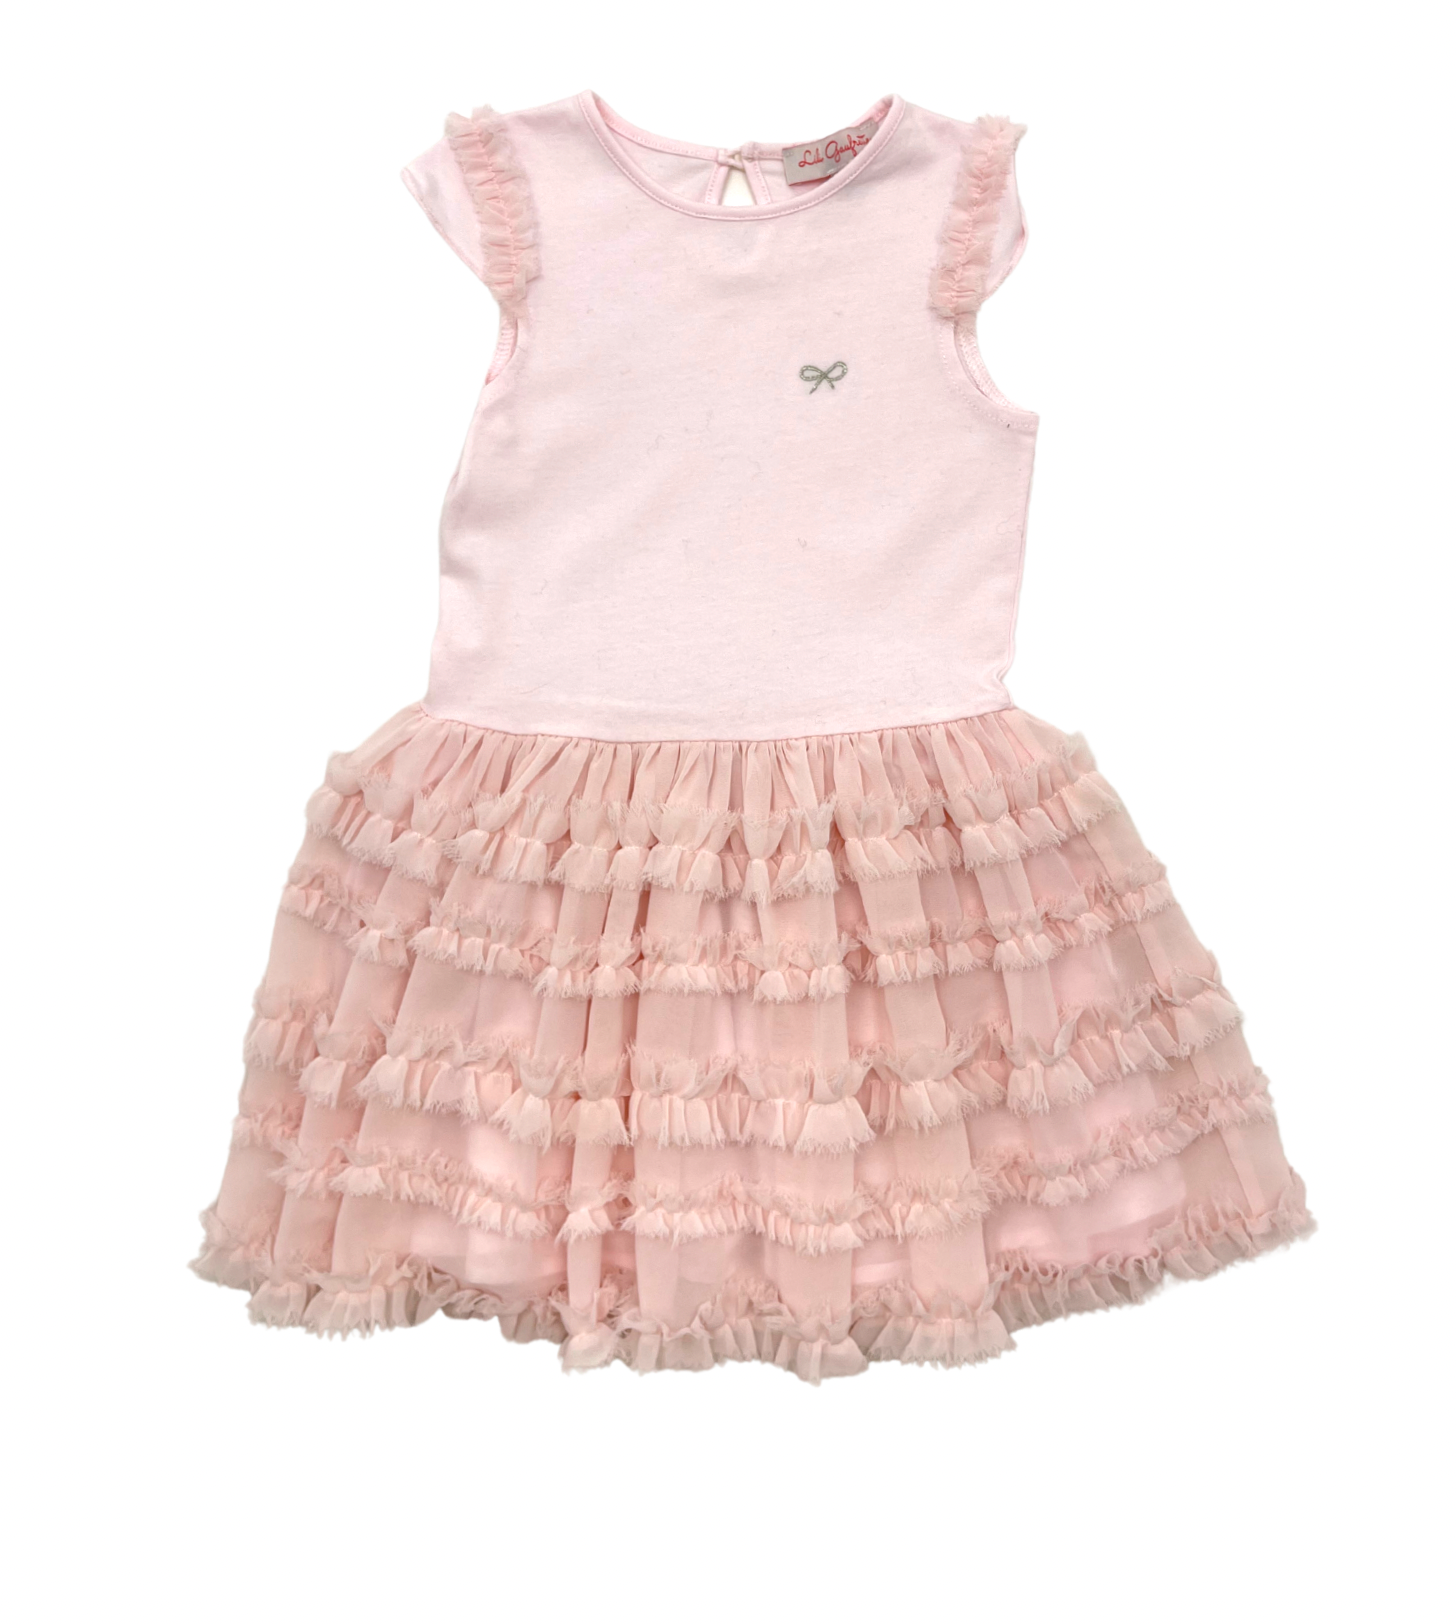 LILI GAUFRETTE - Pink dress - 3 years old